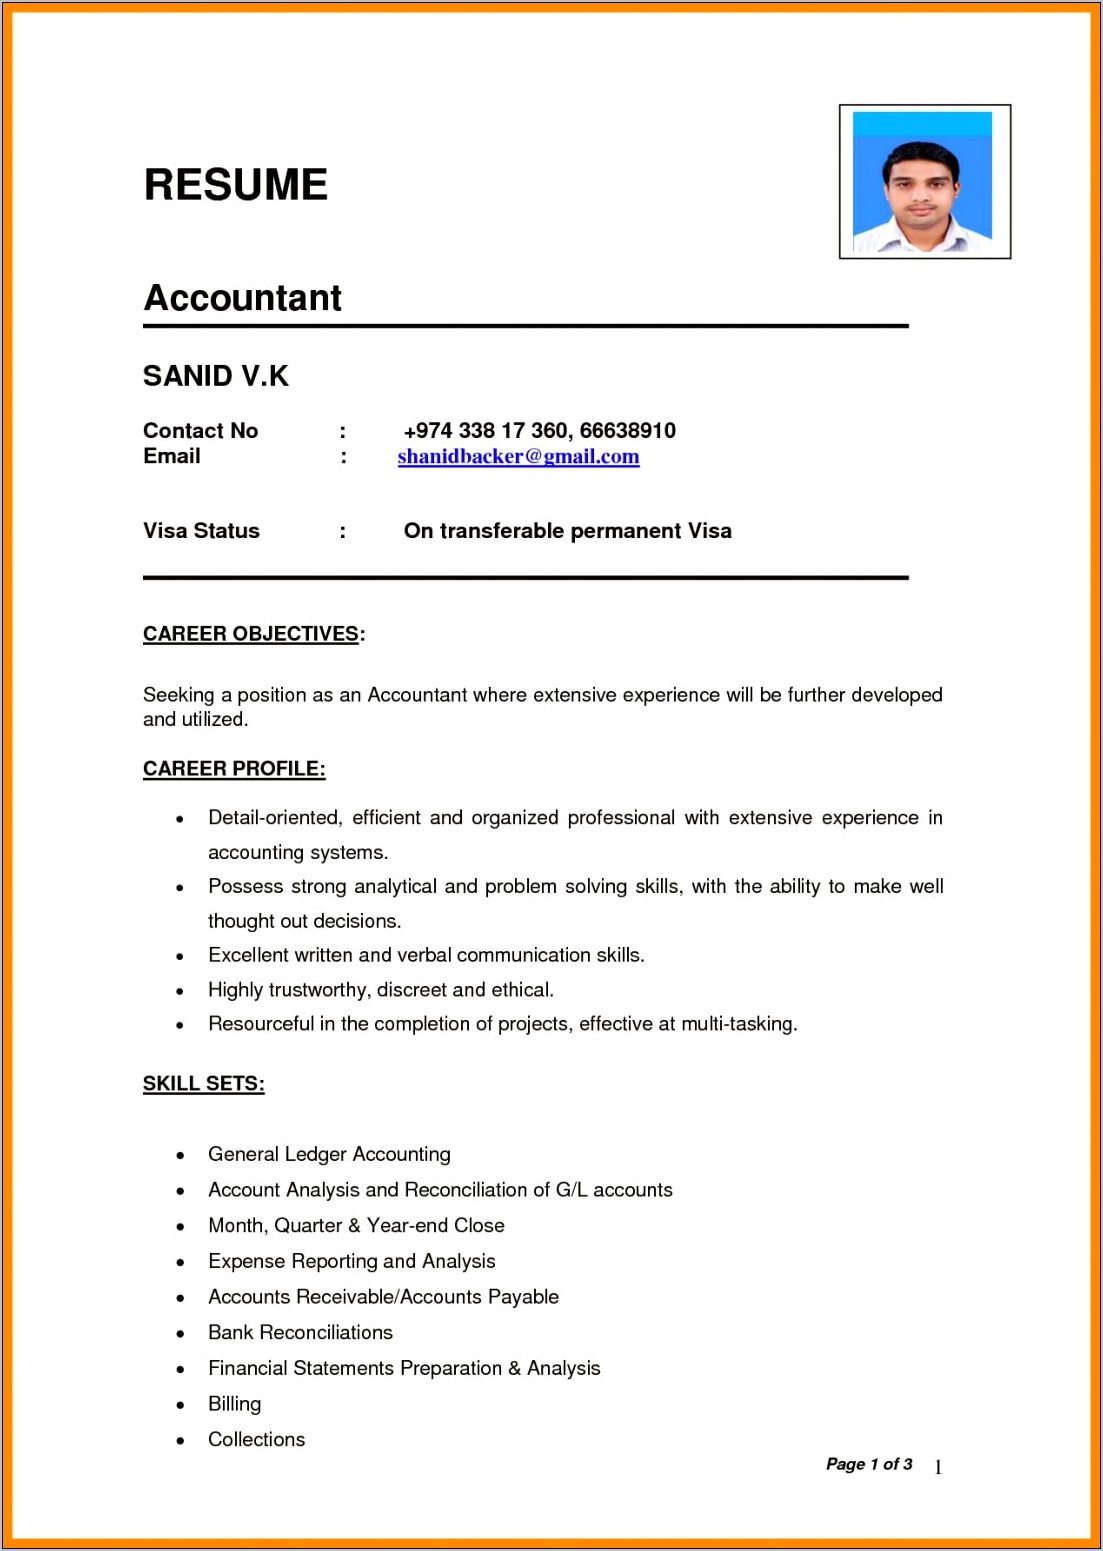 Professional Job Application Resume Format Pdf